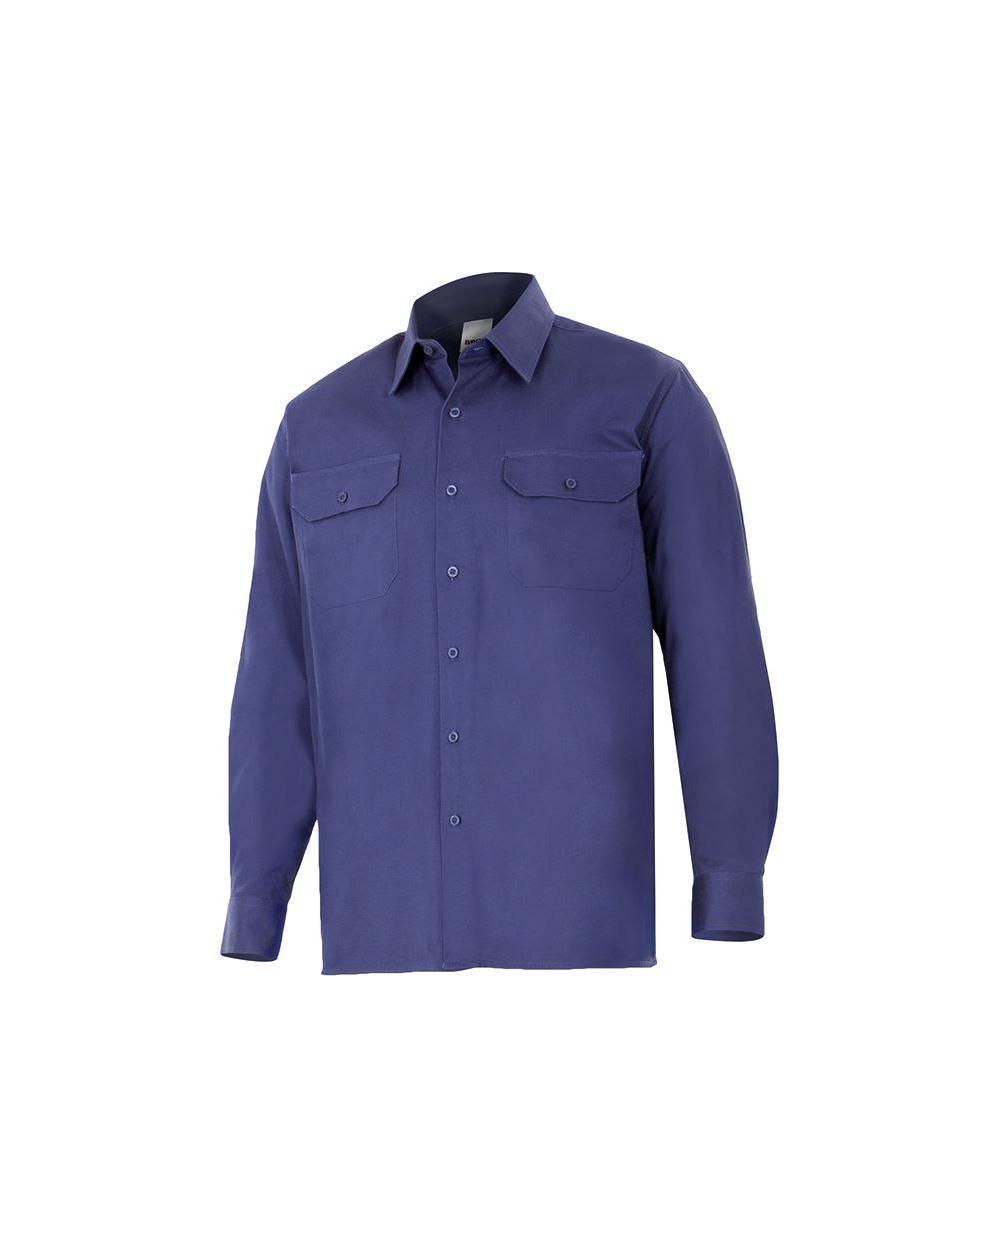 Comprar Camisa 100% algodon manga larga serie 533 online barato Azul Marino